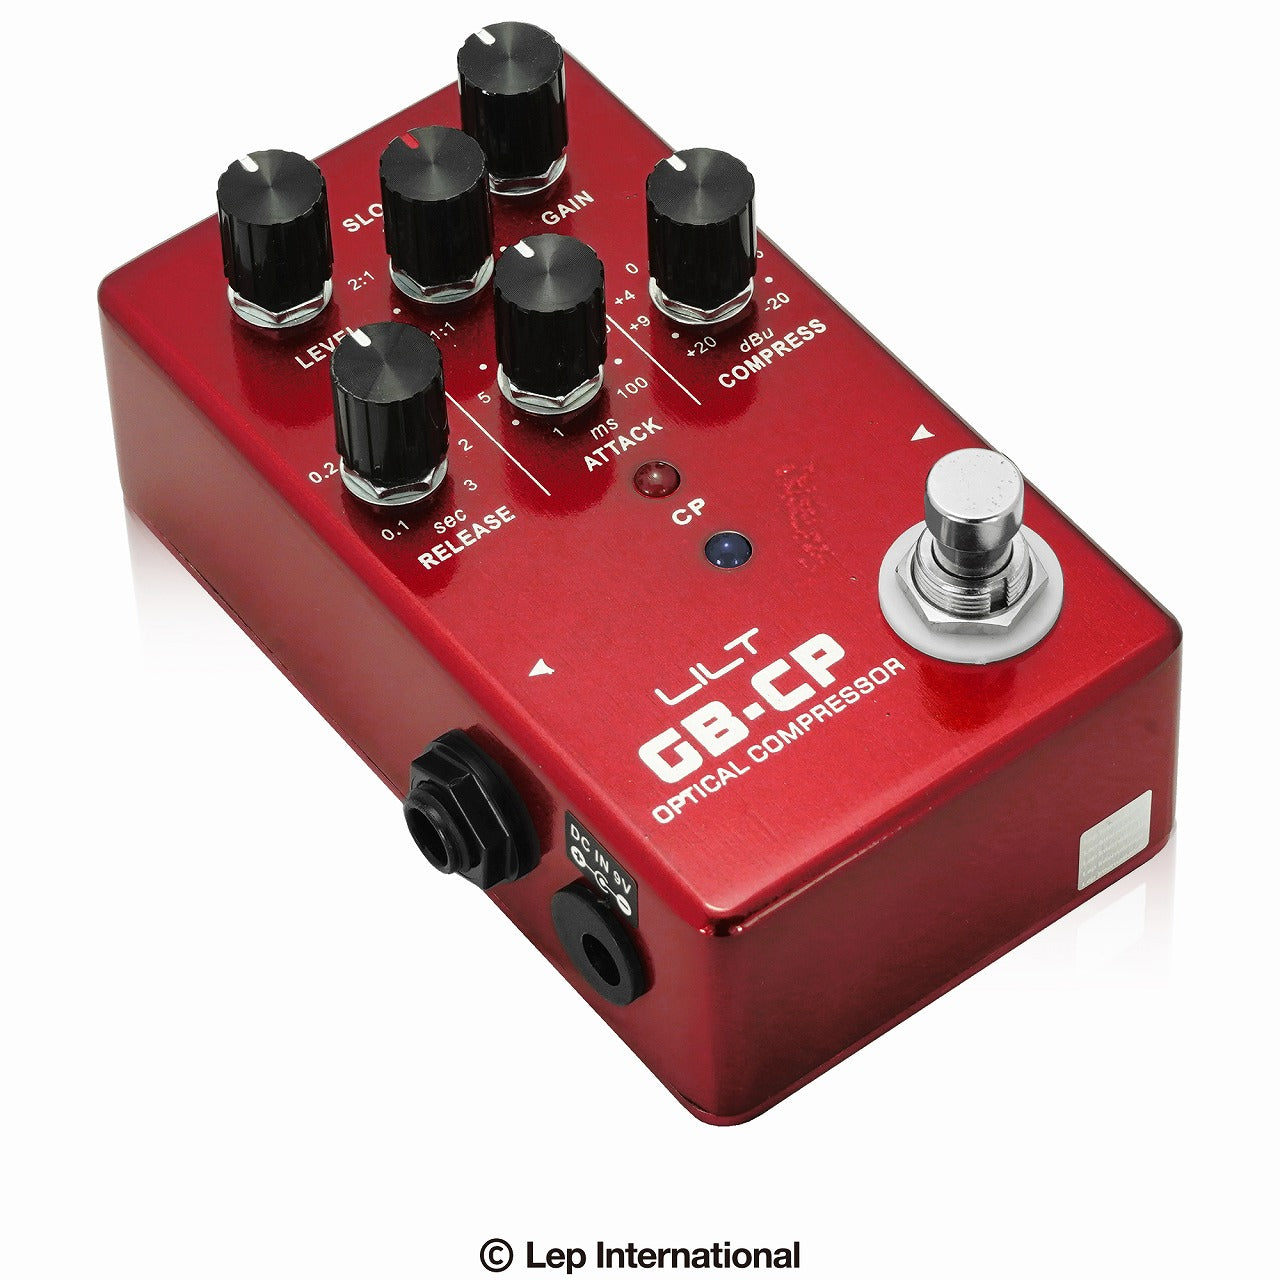 LILT　GB-CP Red　/ コンプレッサー ギター エフェクター